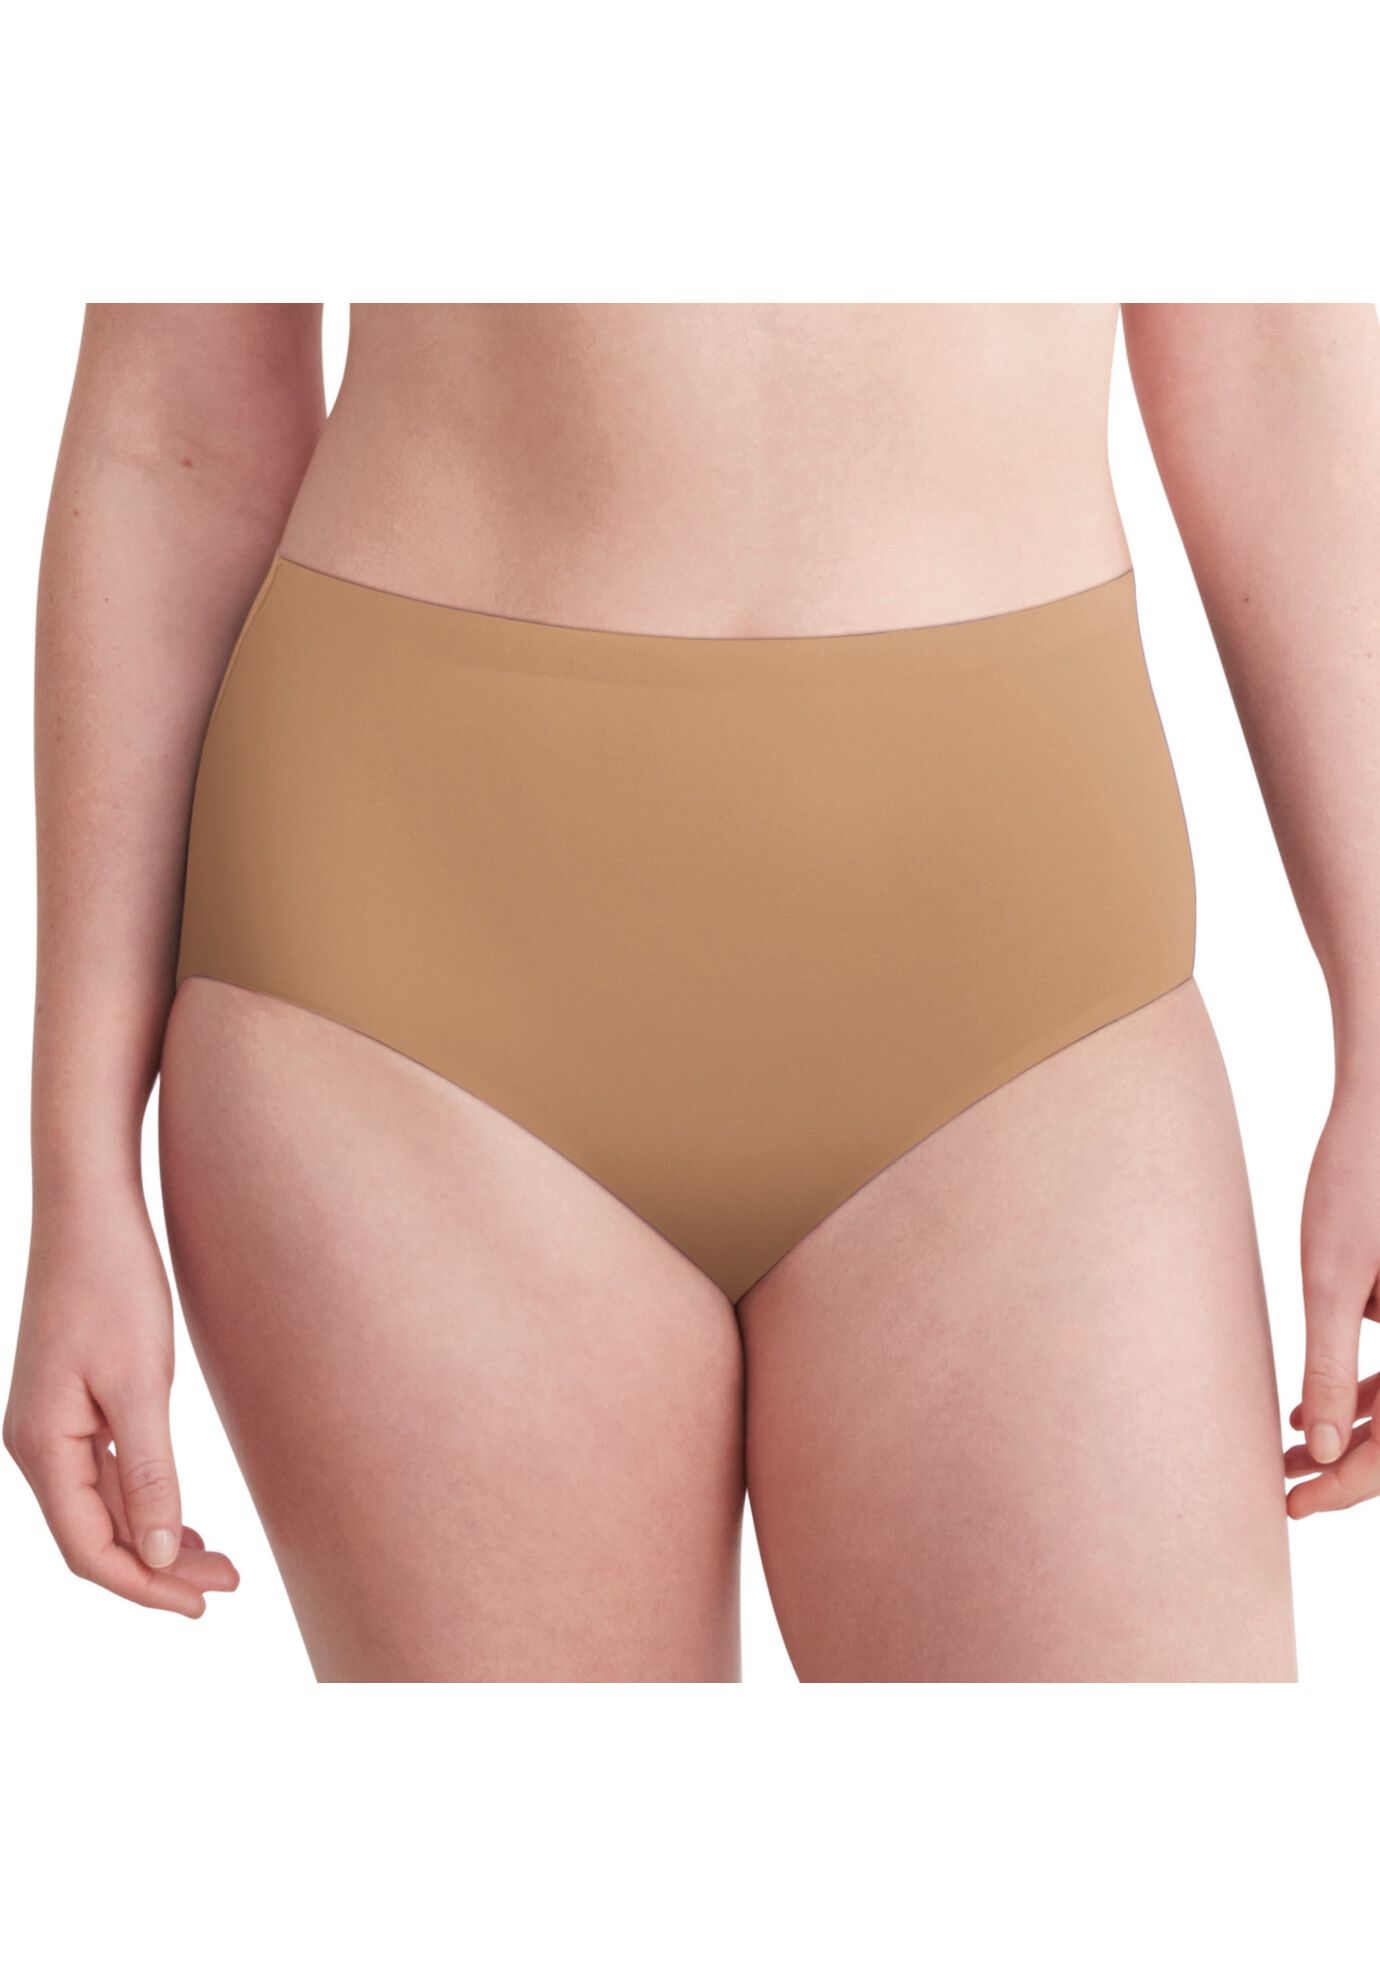 Plus Size Women's Comfort Revolution EasyLite&#8482; Brief by Bali in Cinnamon Butter (Size 6)